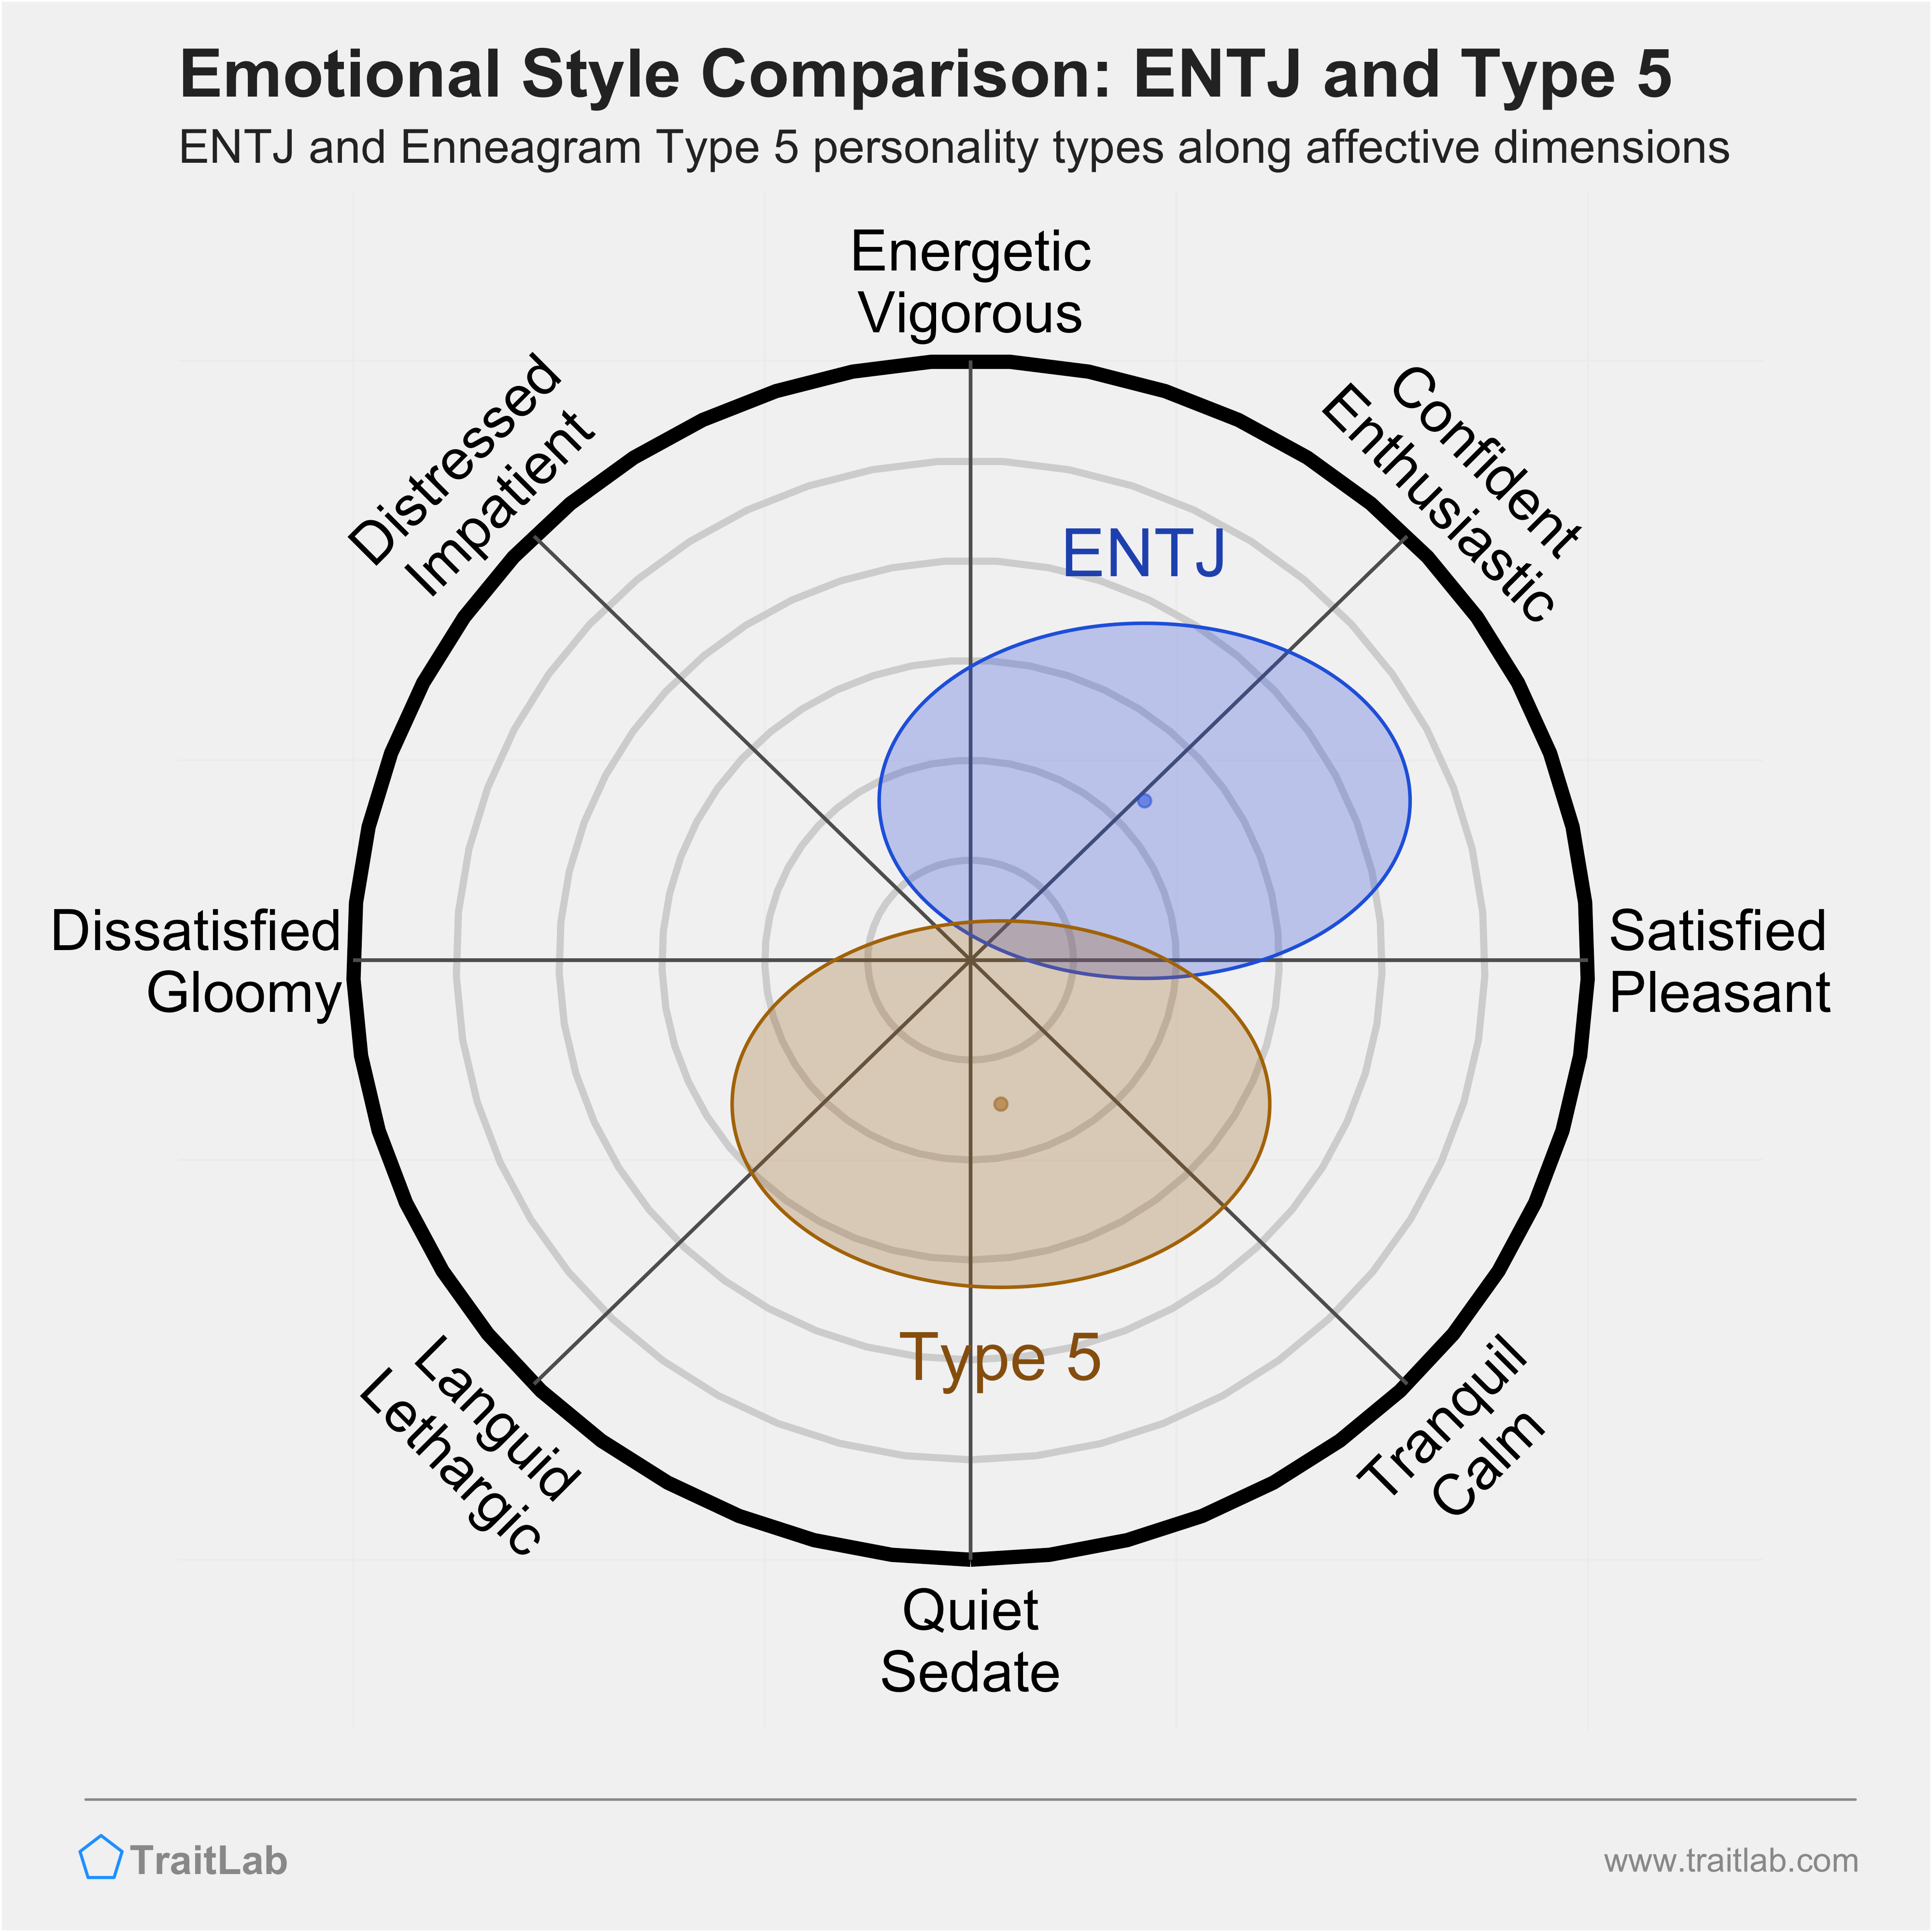 ENTJ and Type 5 comparison across emotional (affective) dimensions